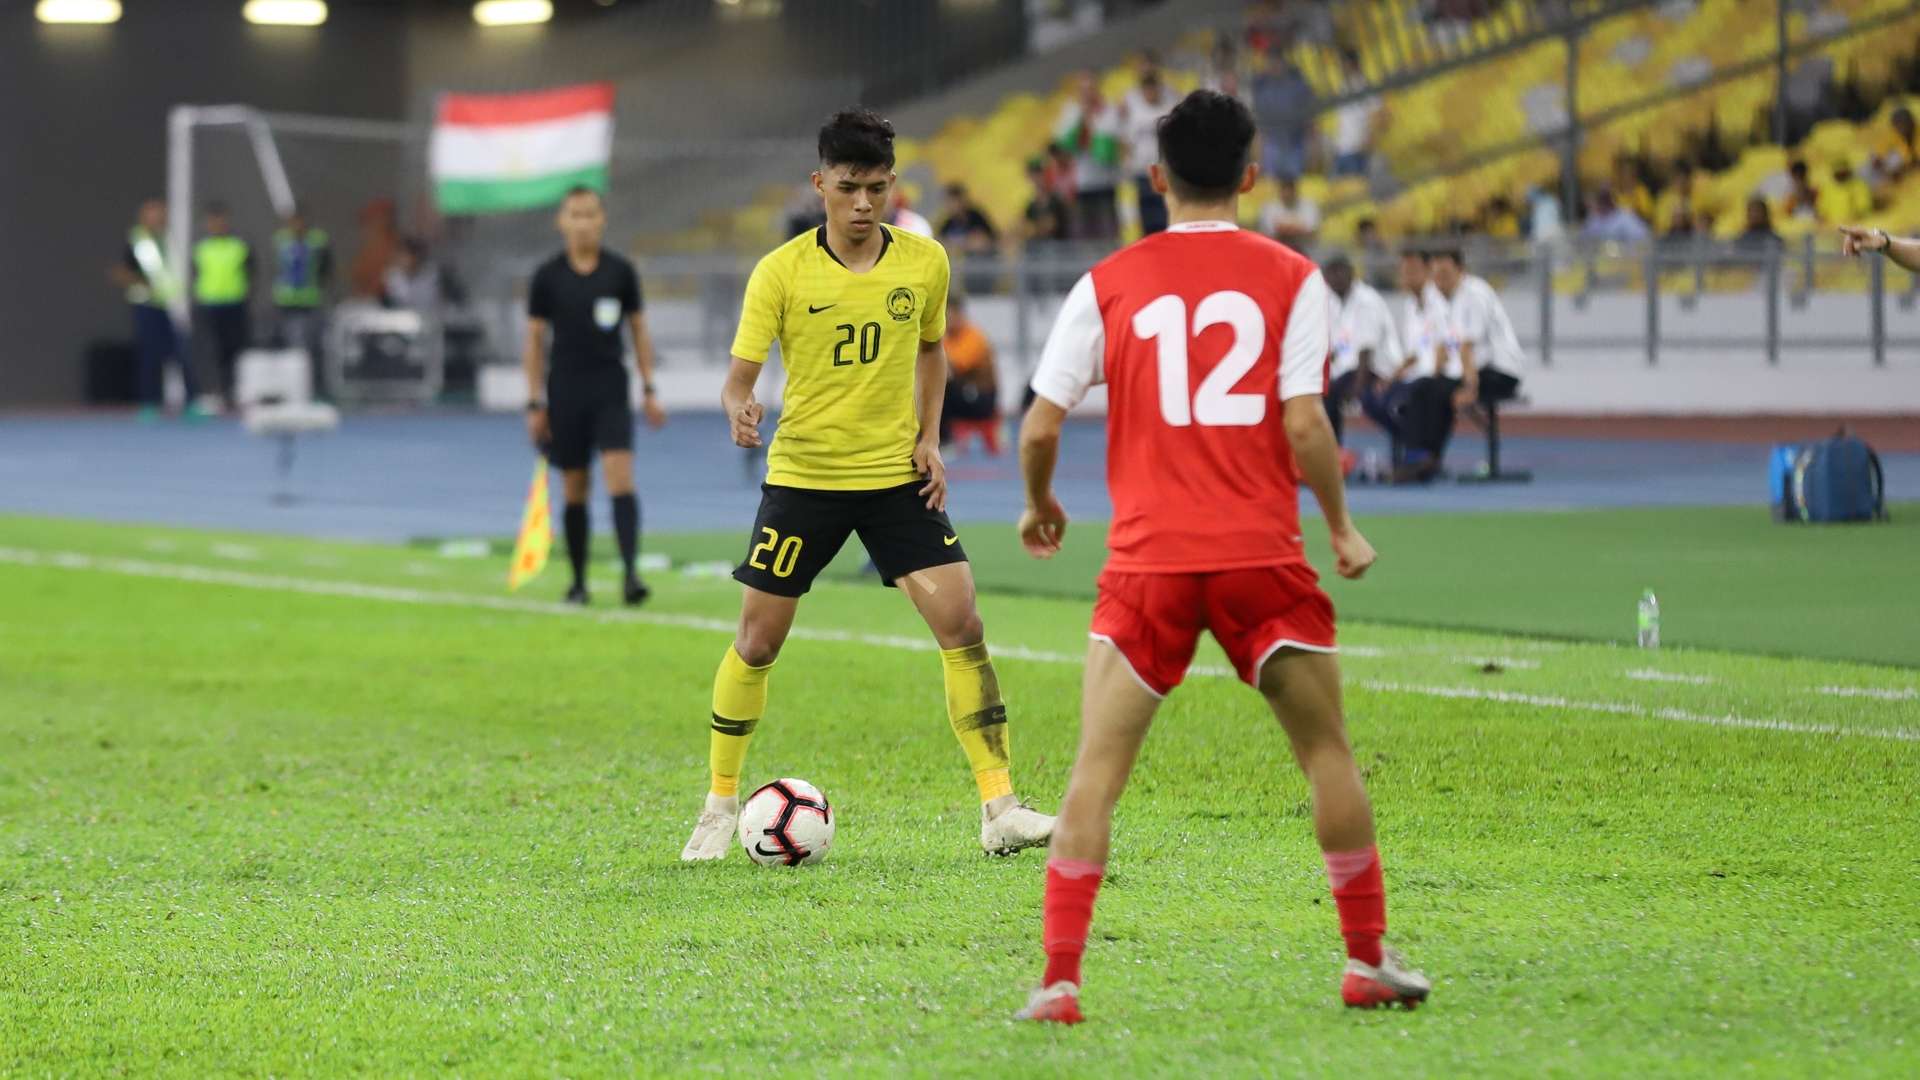 Syafiq Ahmad, Malaysia v Tajikistan, International Friendly, 9 Nov 2019